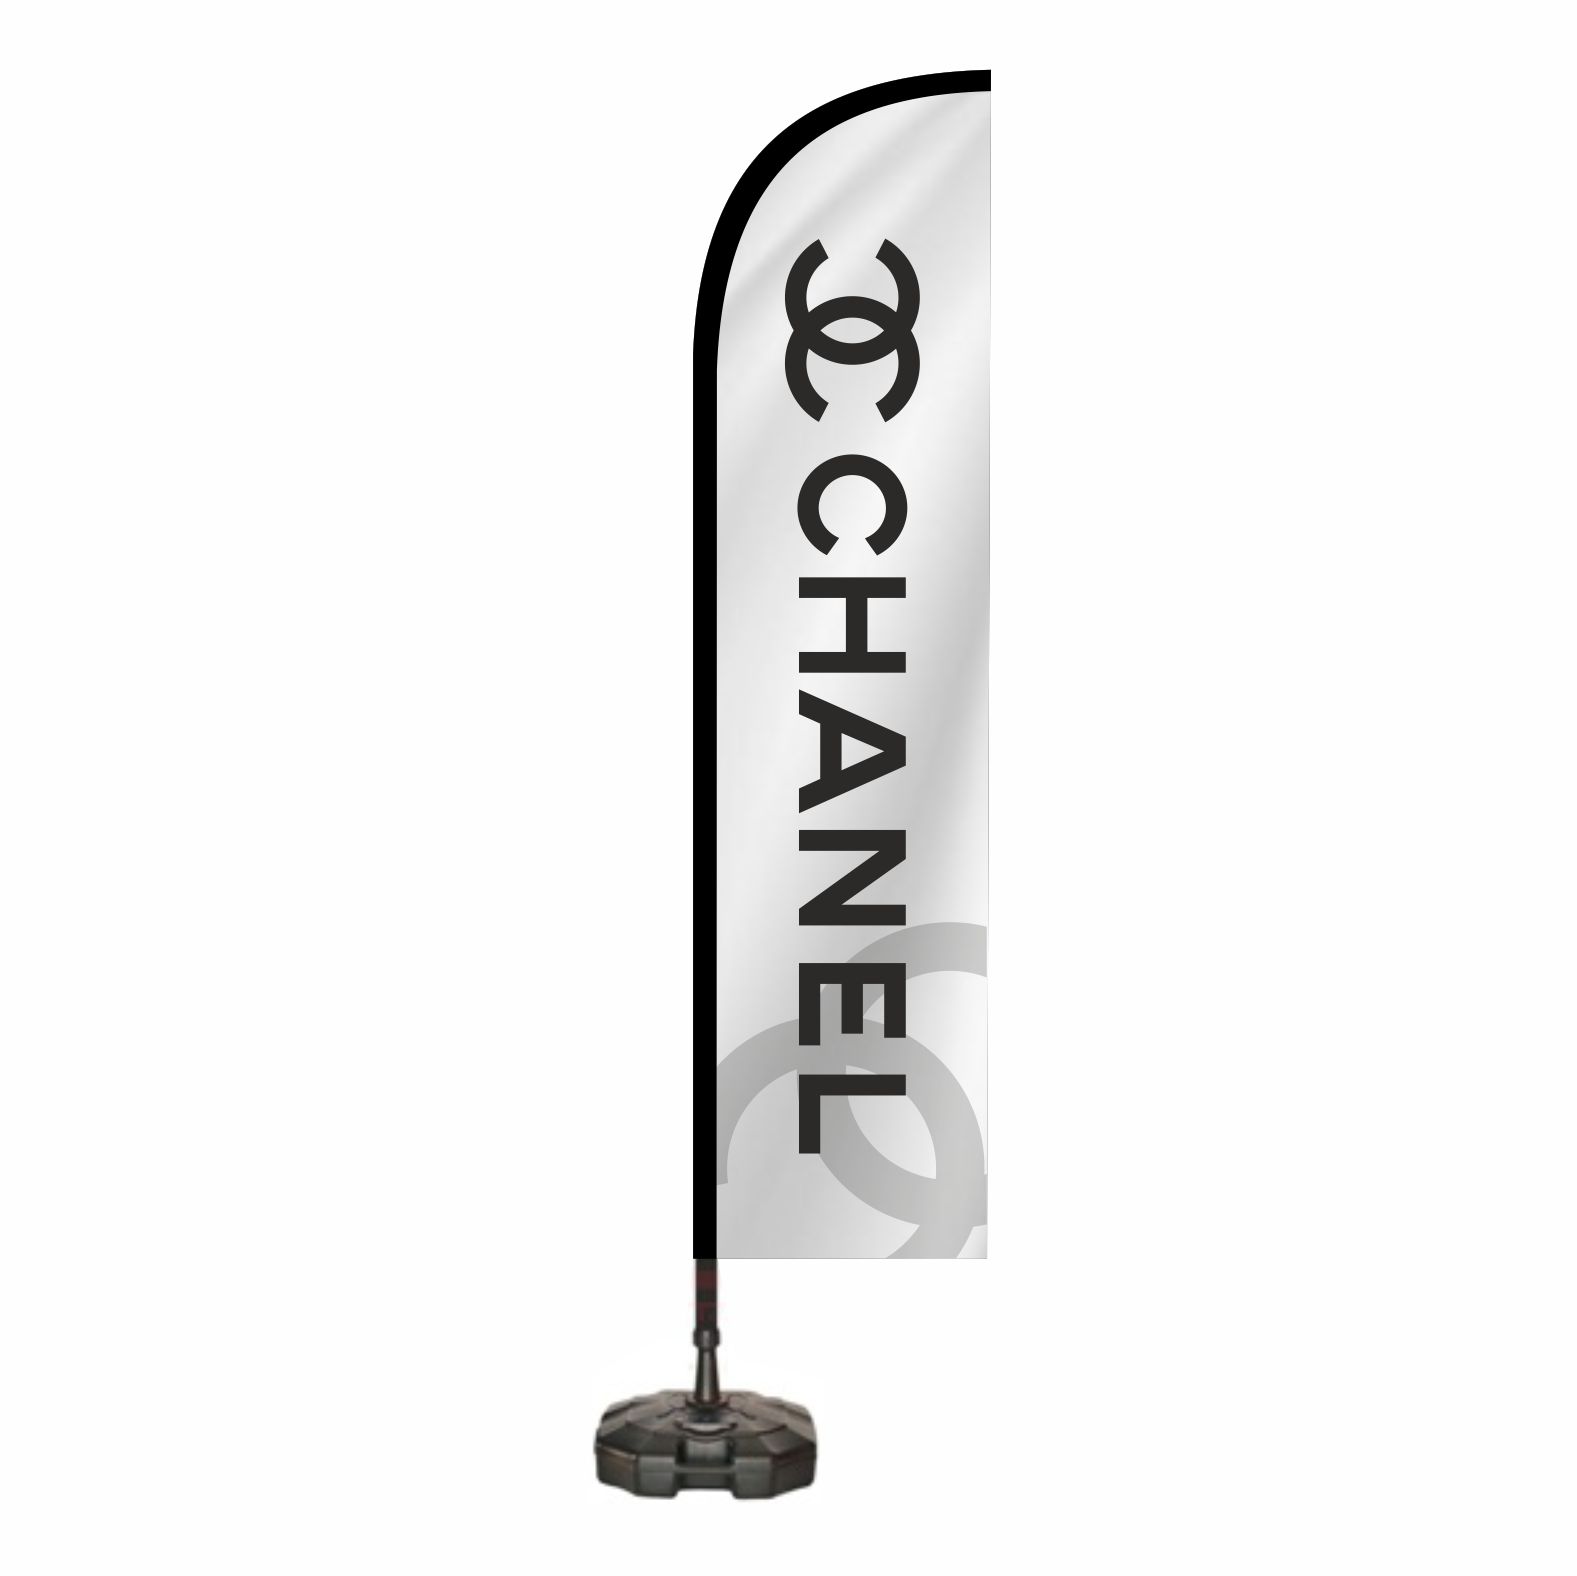 Chanel Kaldrm Bayraklar